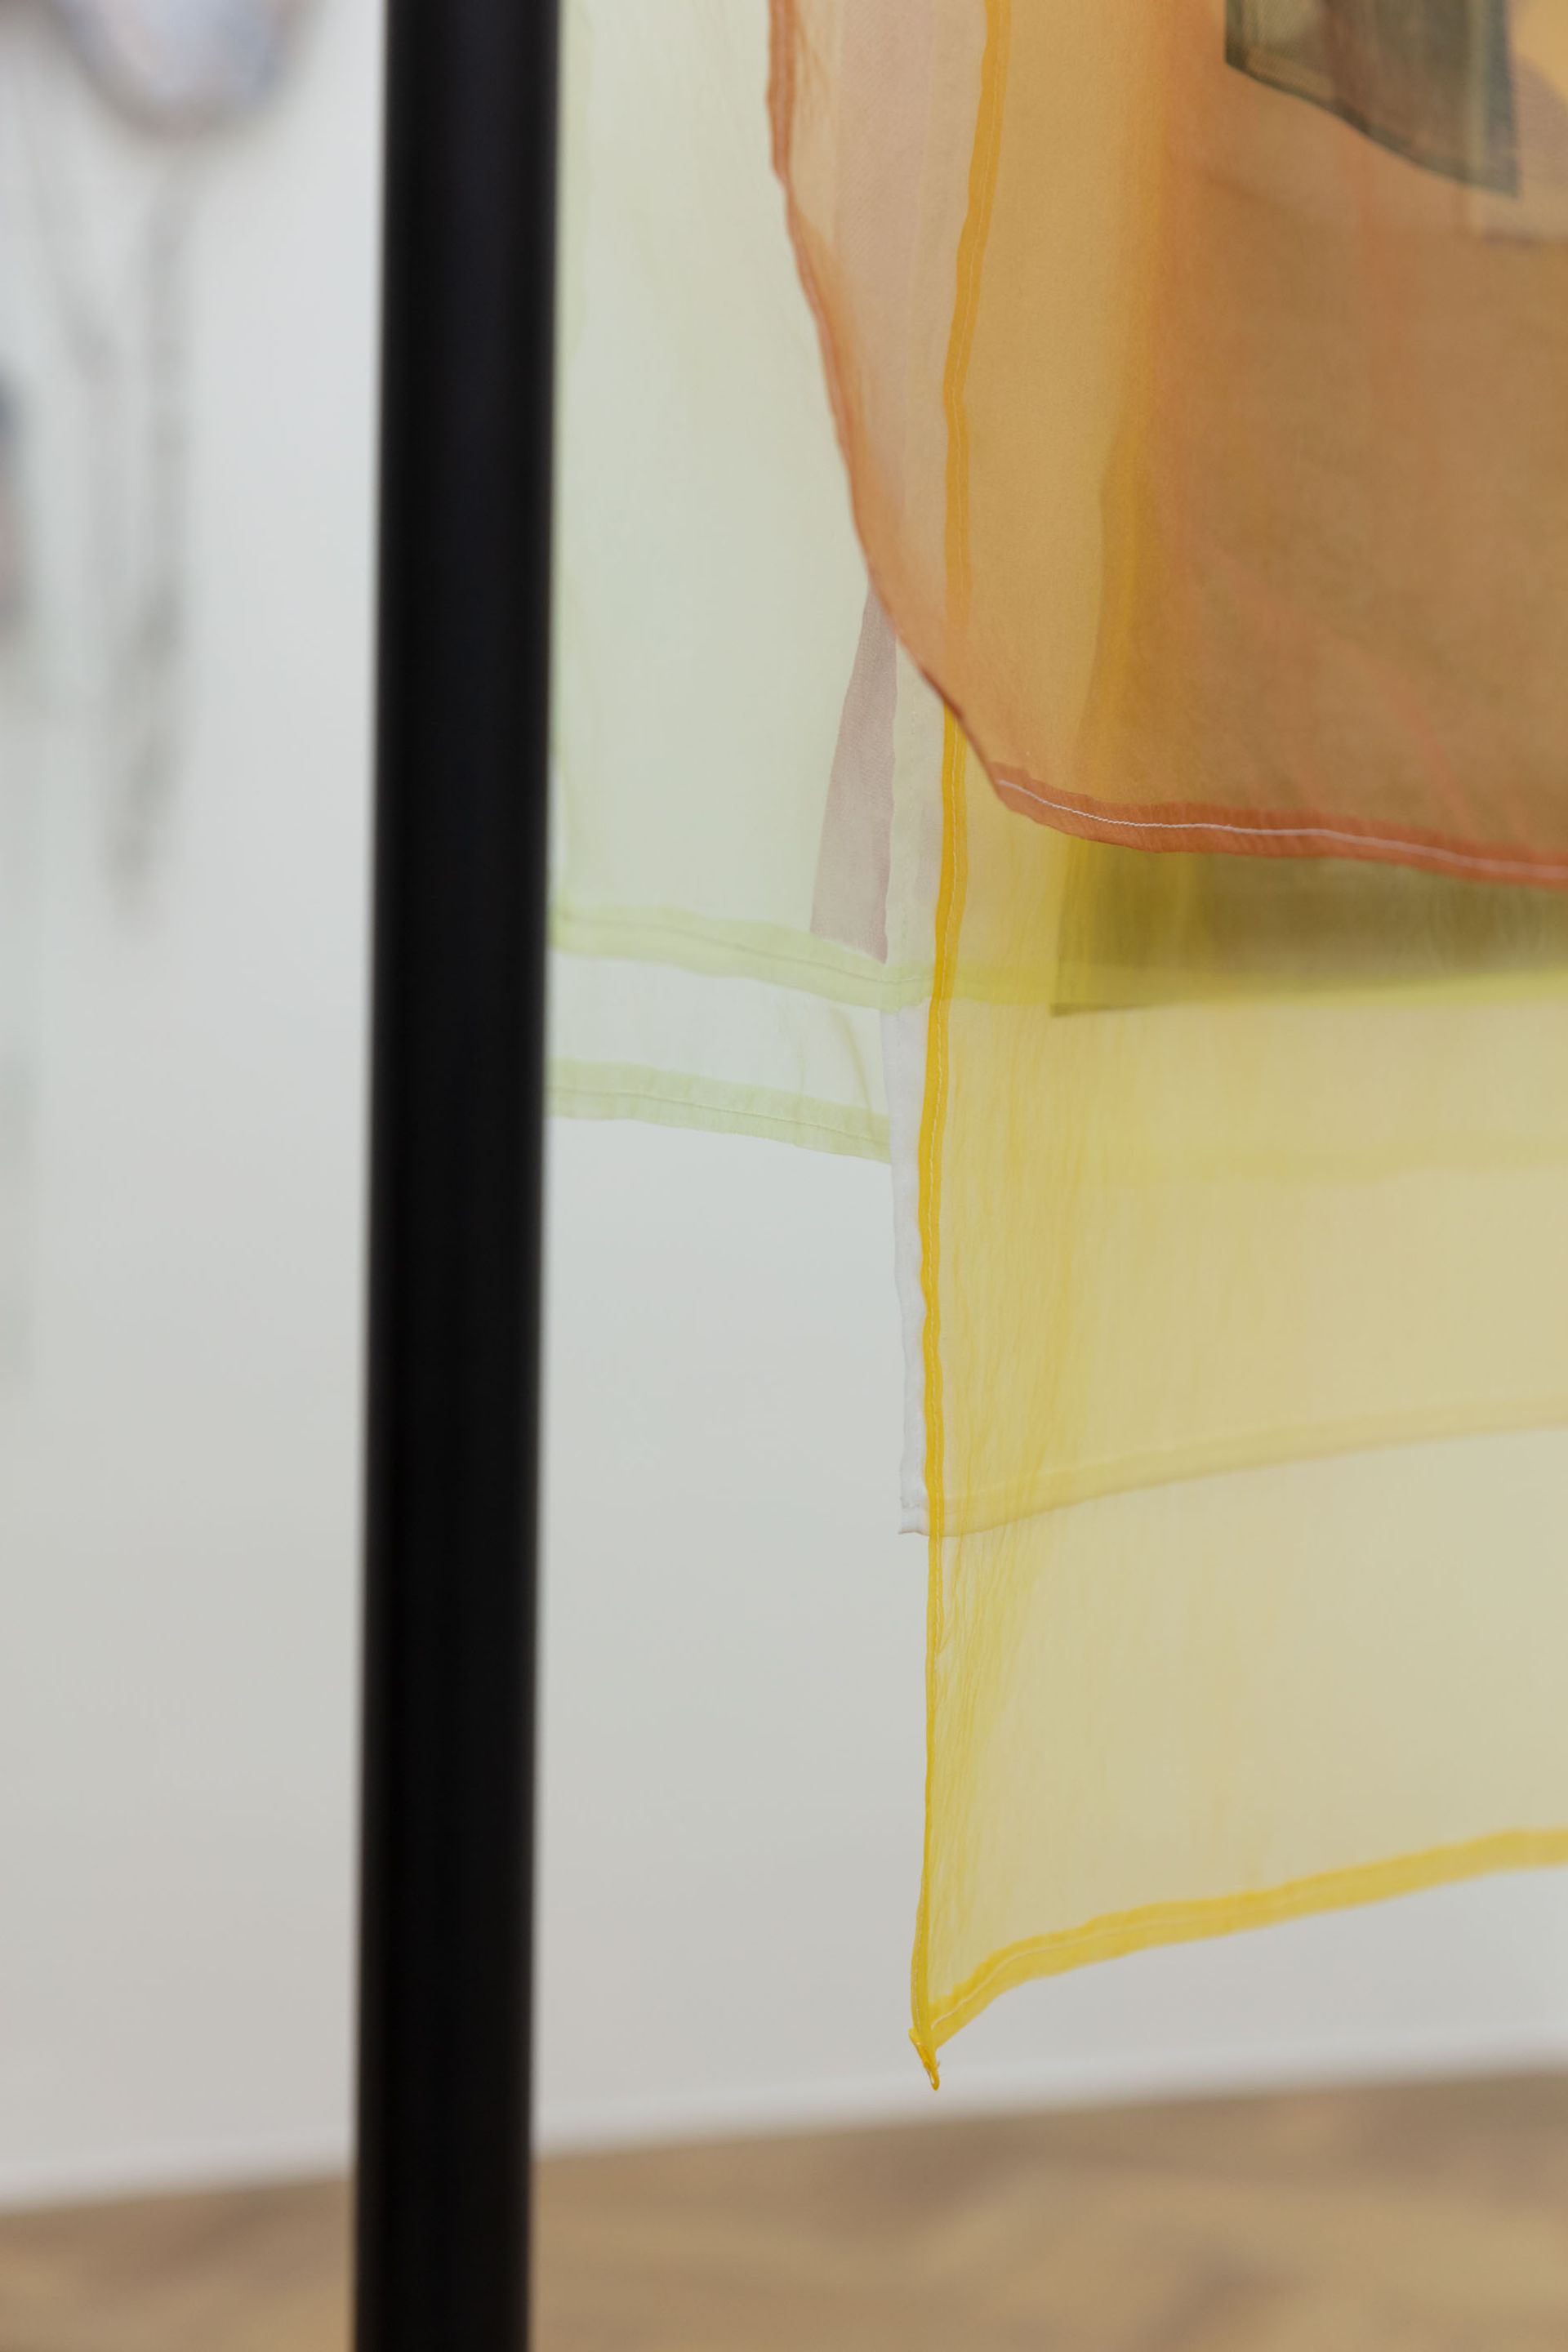 Ana Navas, Lines under a tangerine light, 2021, Silkscreen on translucent textile and metal stand, 186 × 103 × 35 cm